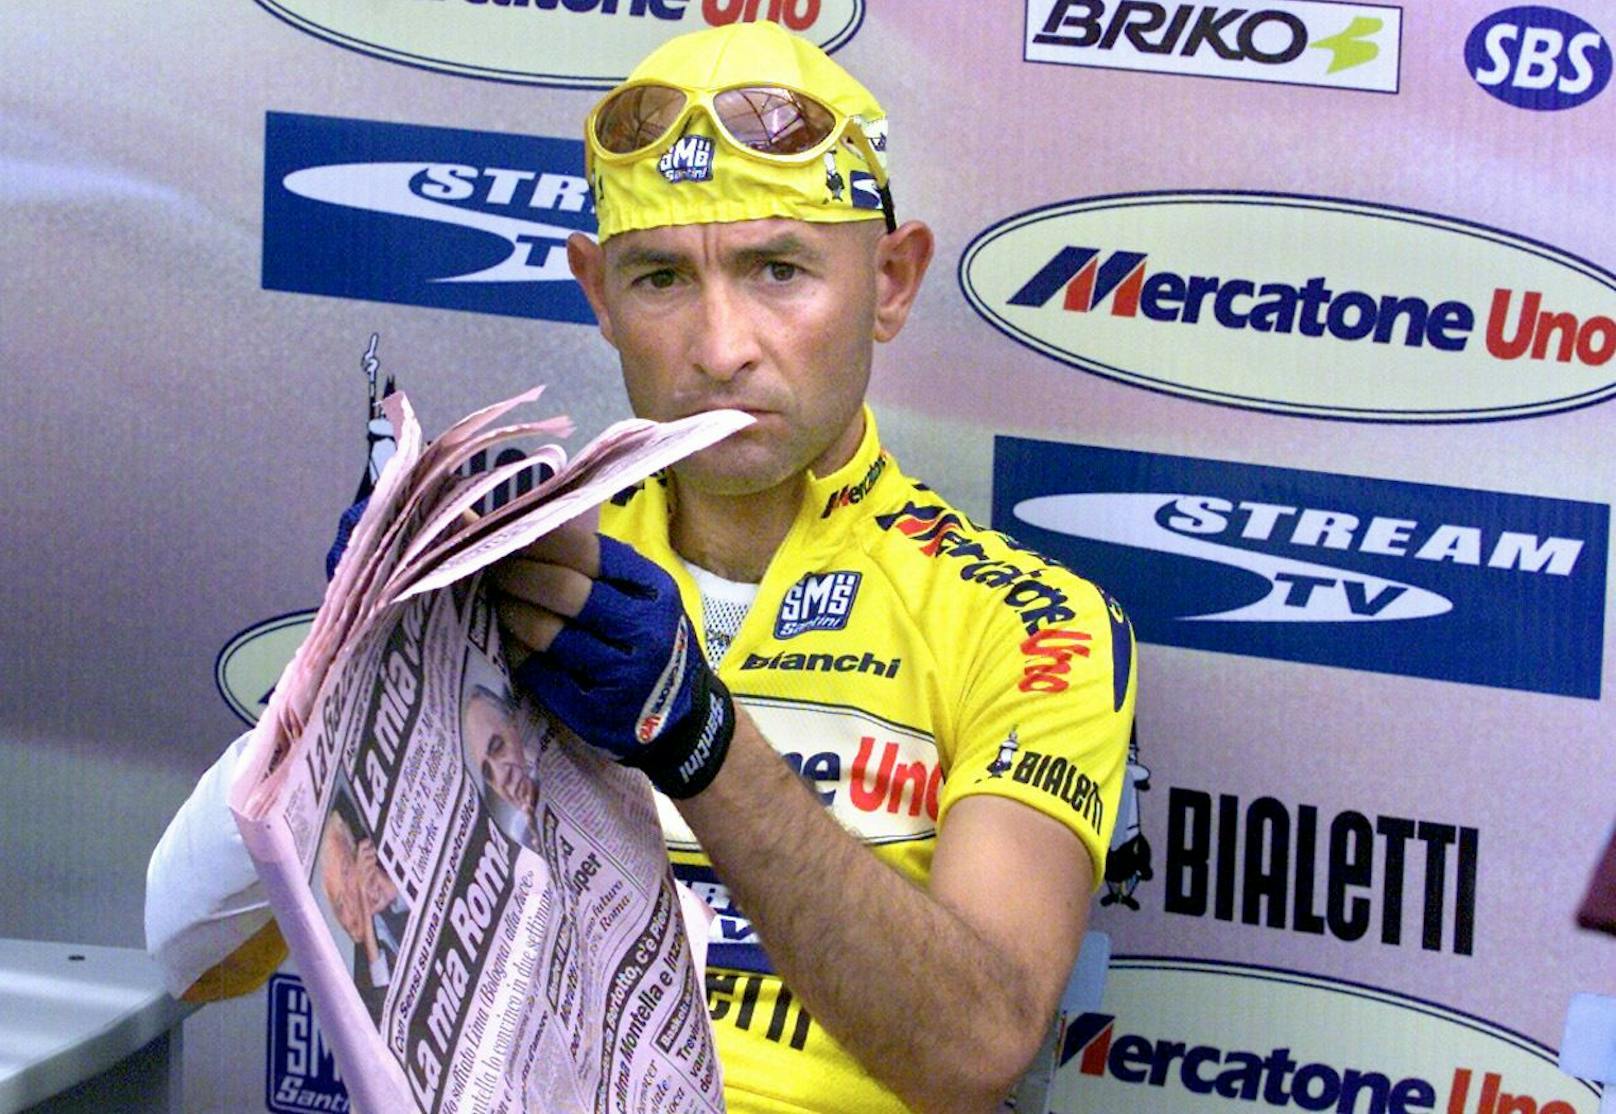 Marco Pantani im Jahr 2001